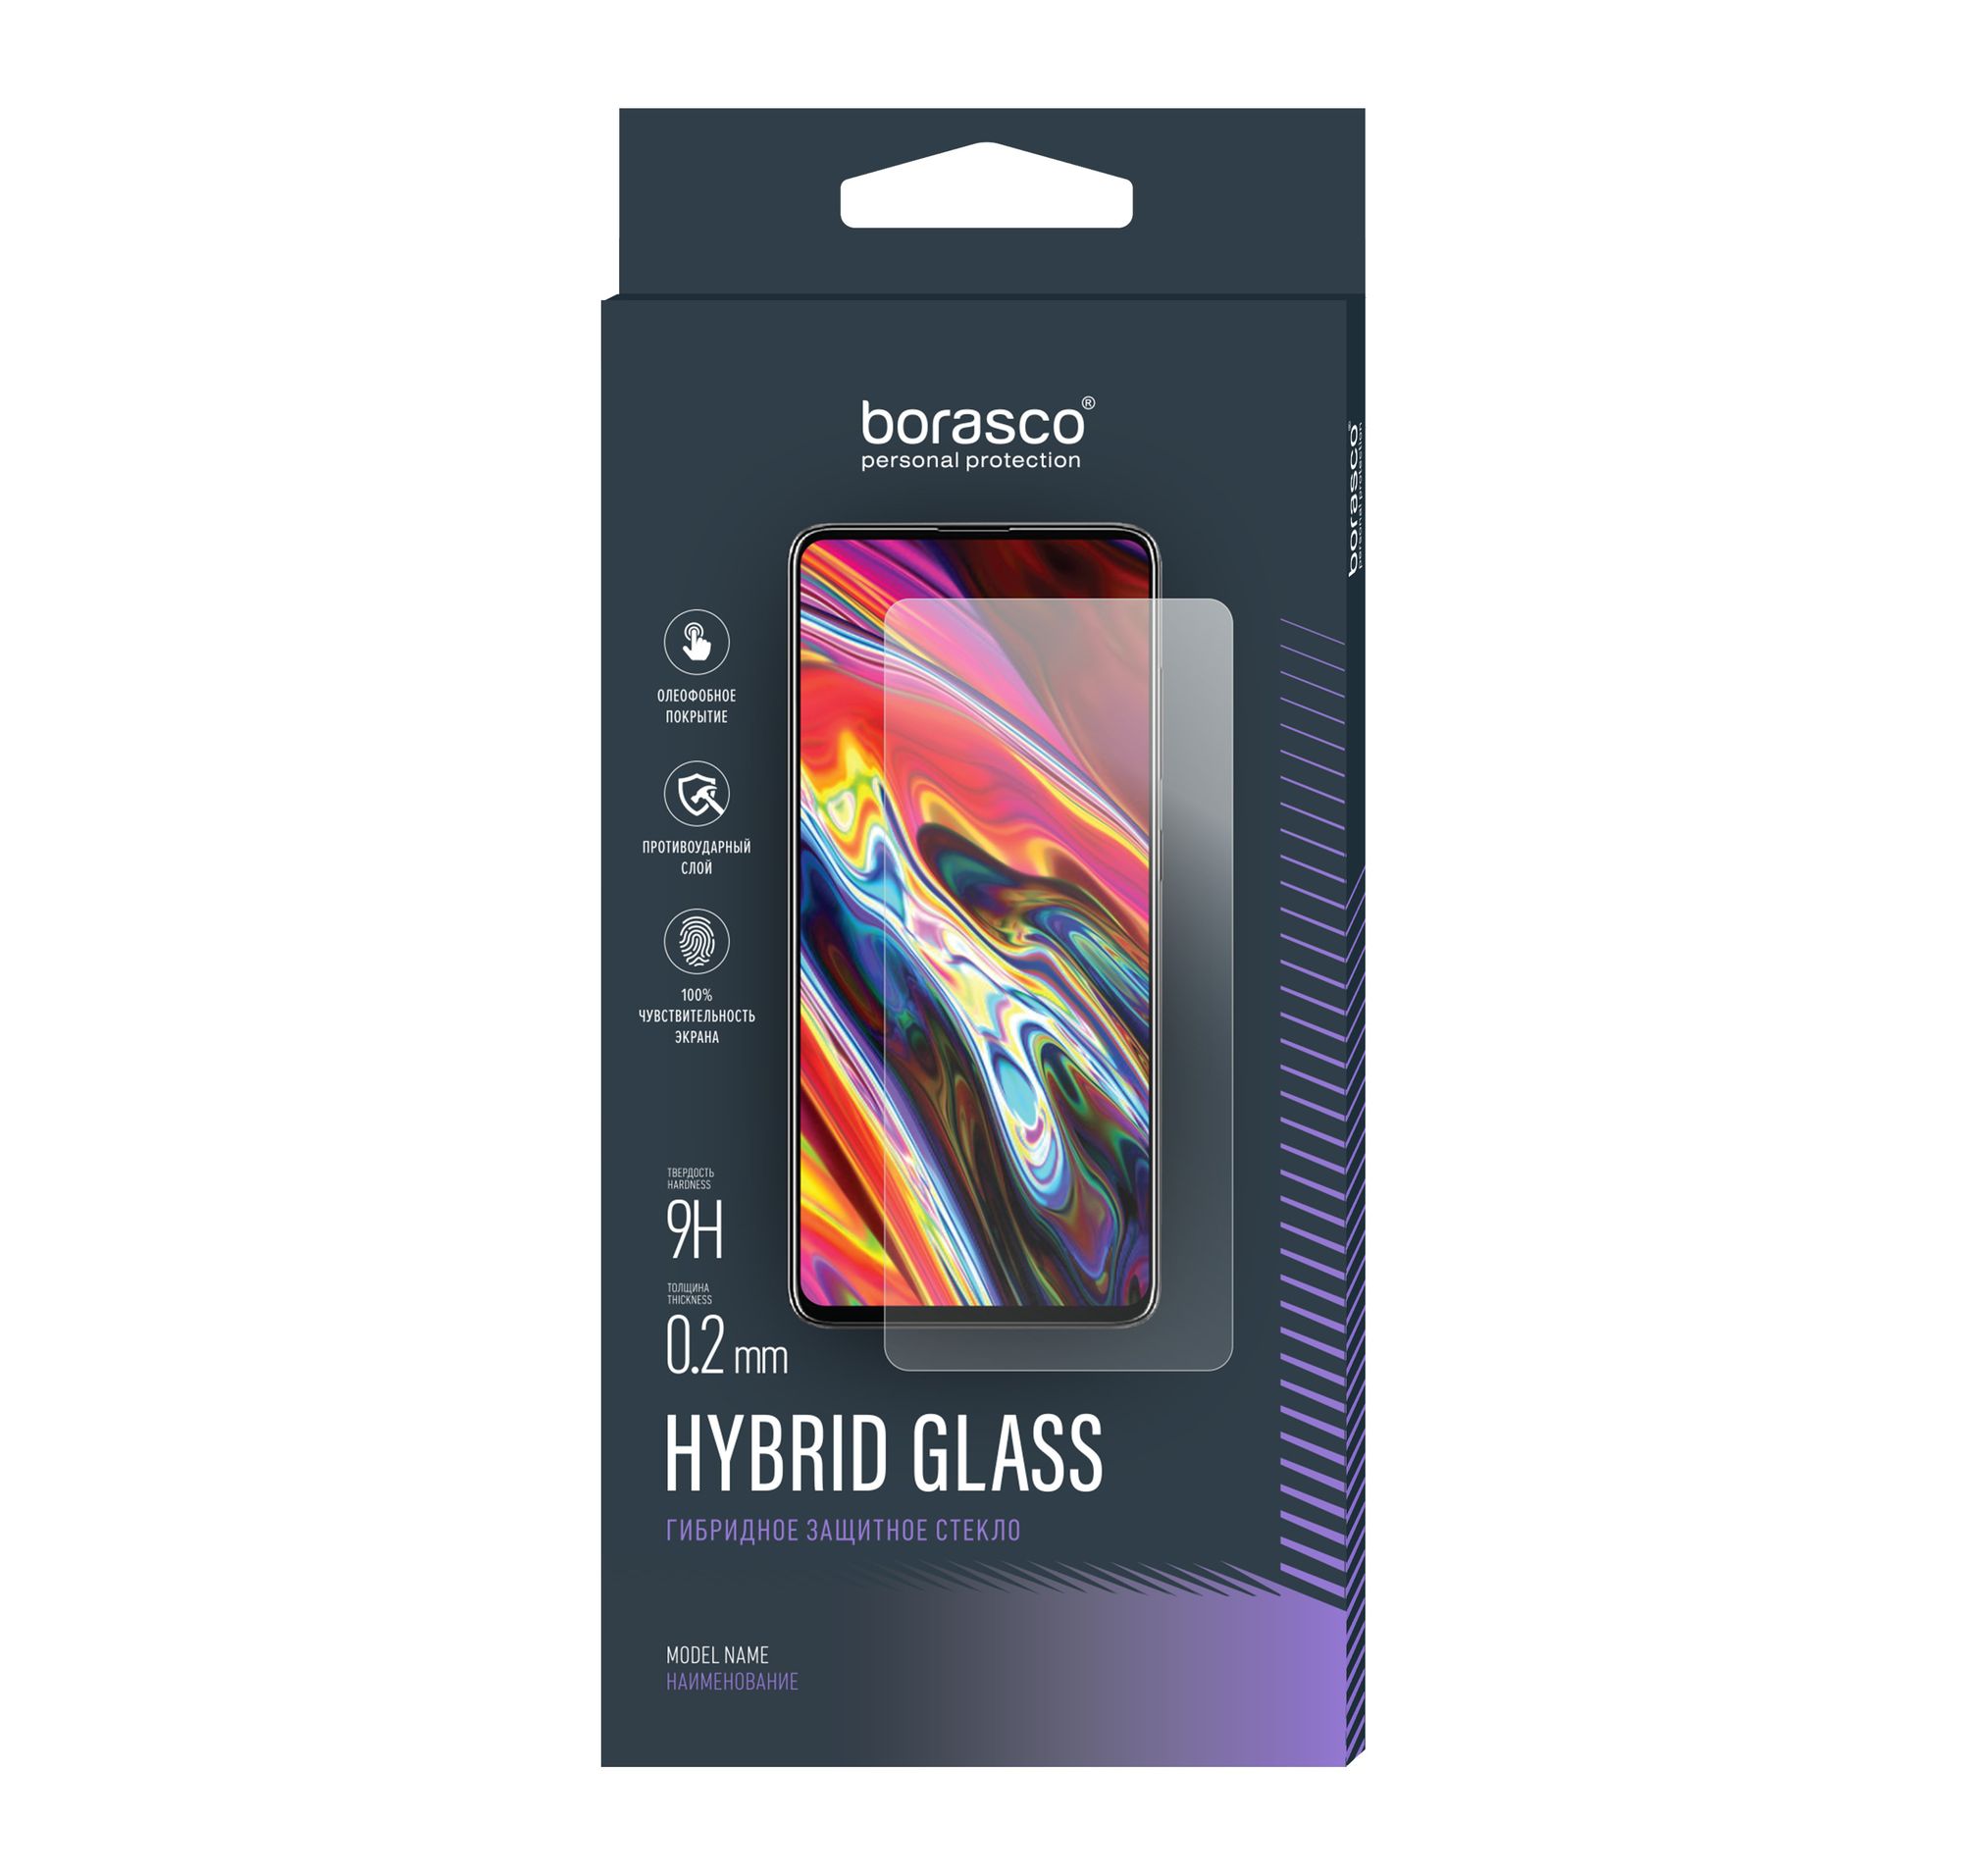 Стекло защитное Hybrid Glass VSP 0,26 мм для ASUS Zenfone Go ZB500KL/ZB500KG westrock b11p1602 2600mah battery for asus zenfone go 5 zb500kl x00ad x00ada x00adc cell phone